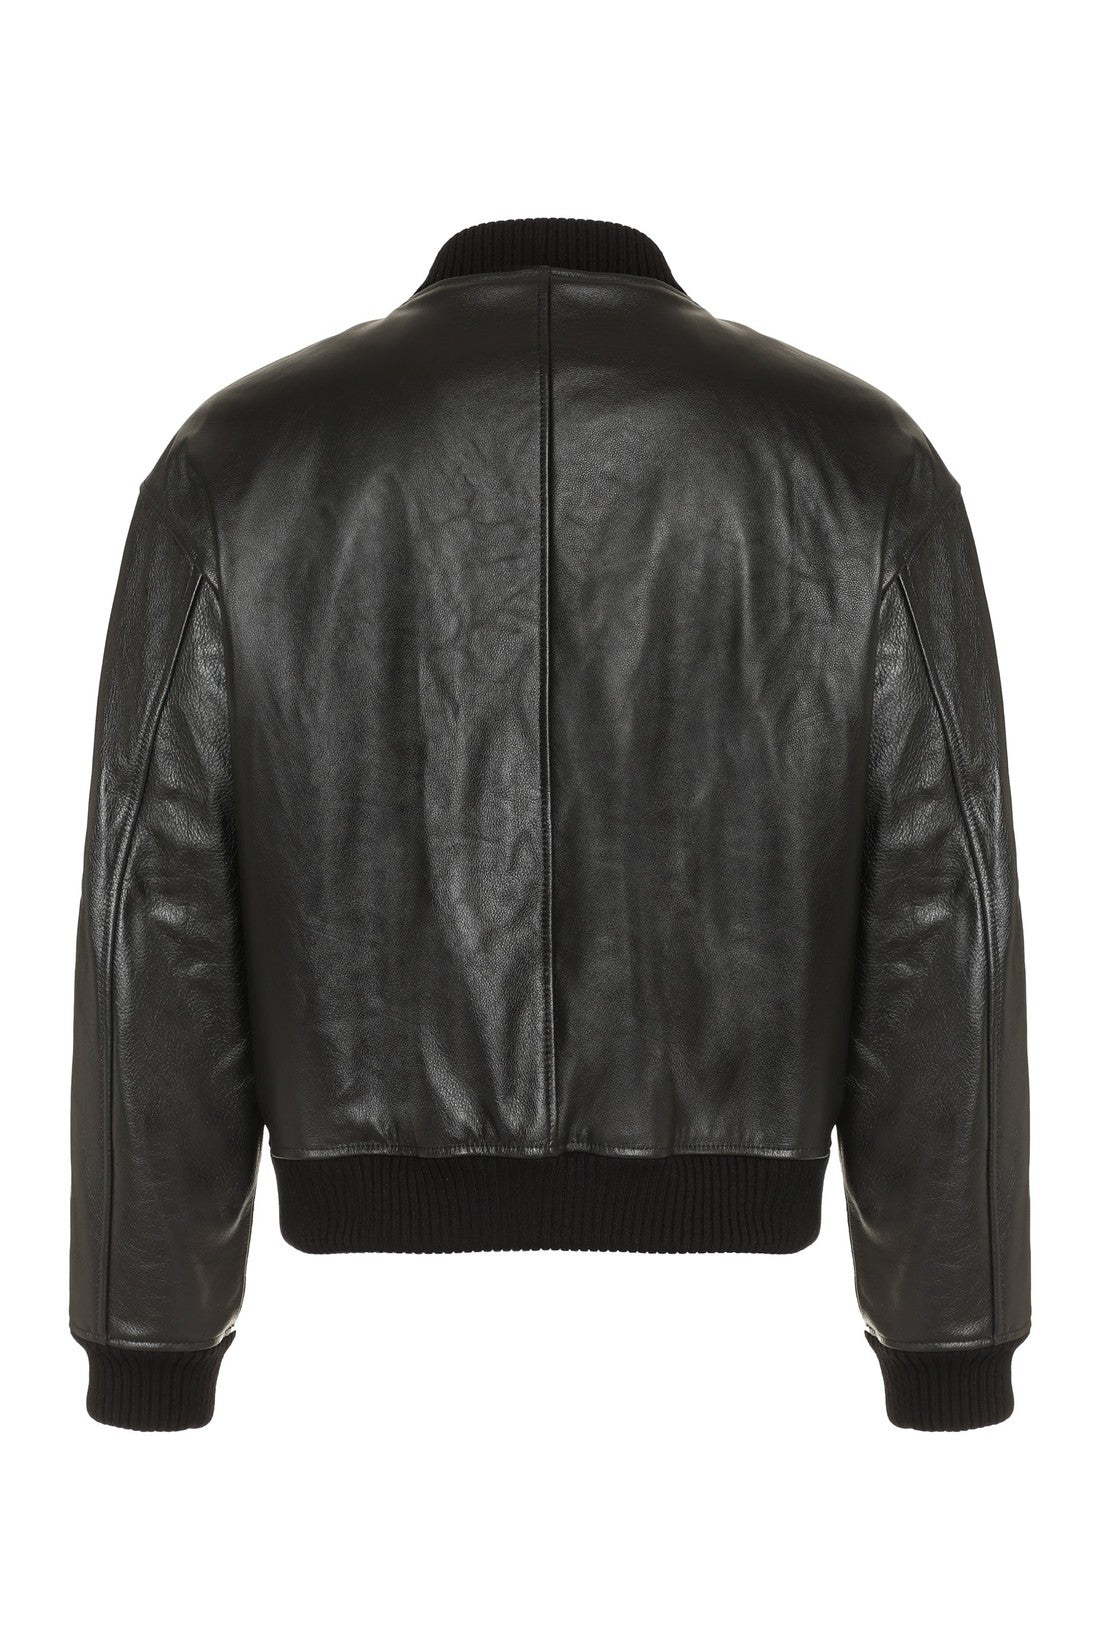 Dolce & Gabbana-OUTLET-SALE-Leather jacket-ARCHIVIST